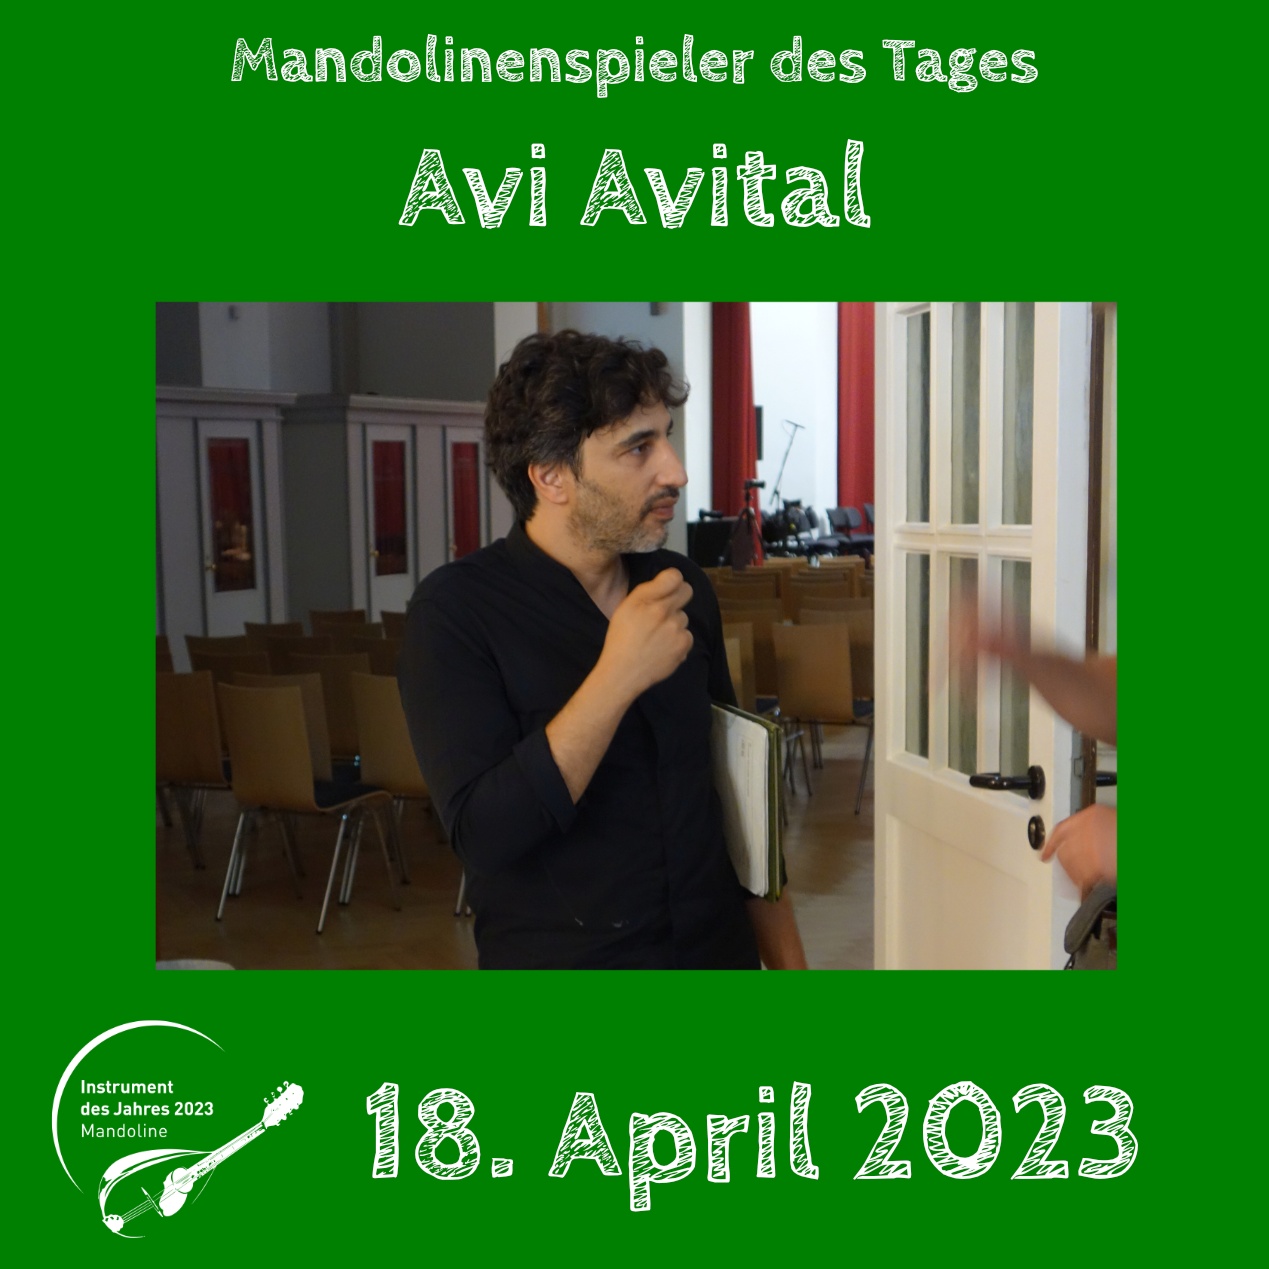 Avi Avital Instrument des Jahres 2023 Mandolinenspieler Mandolinenspielerin des Tages